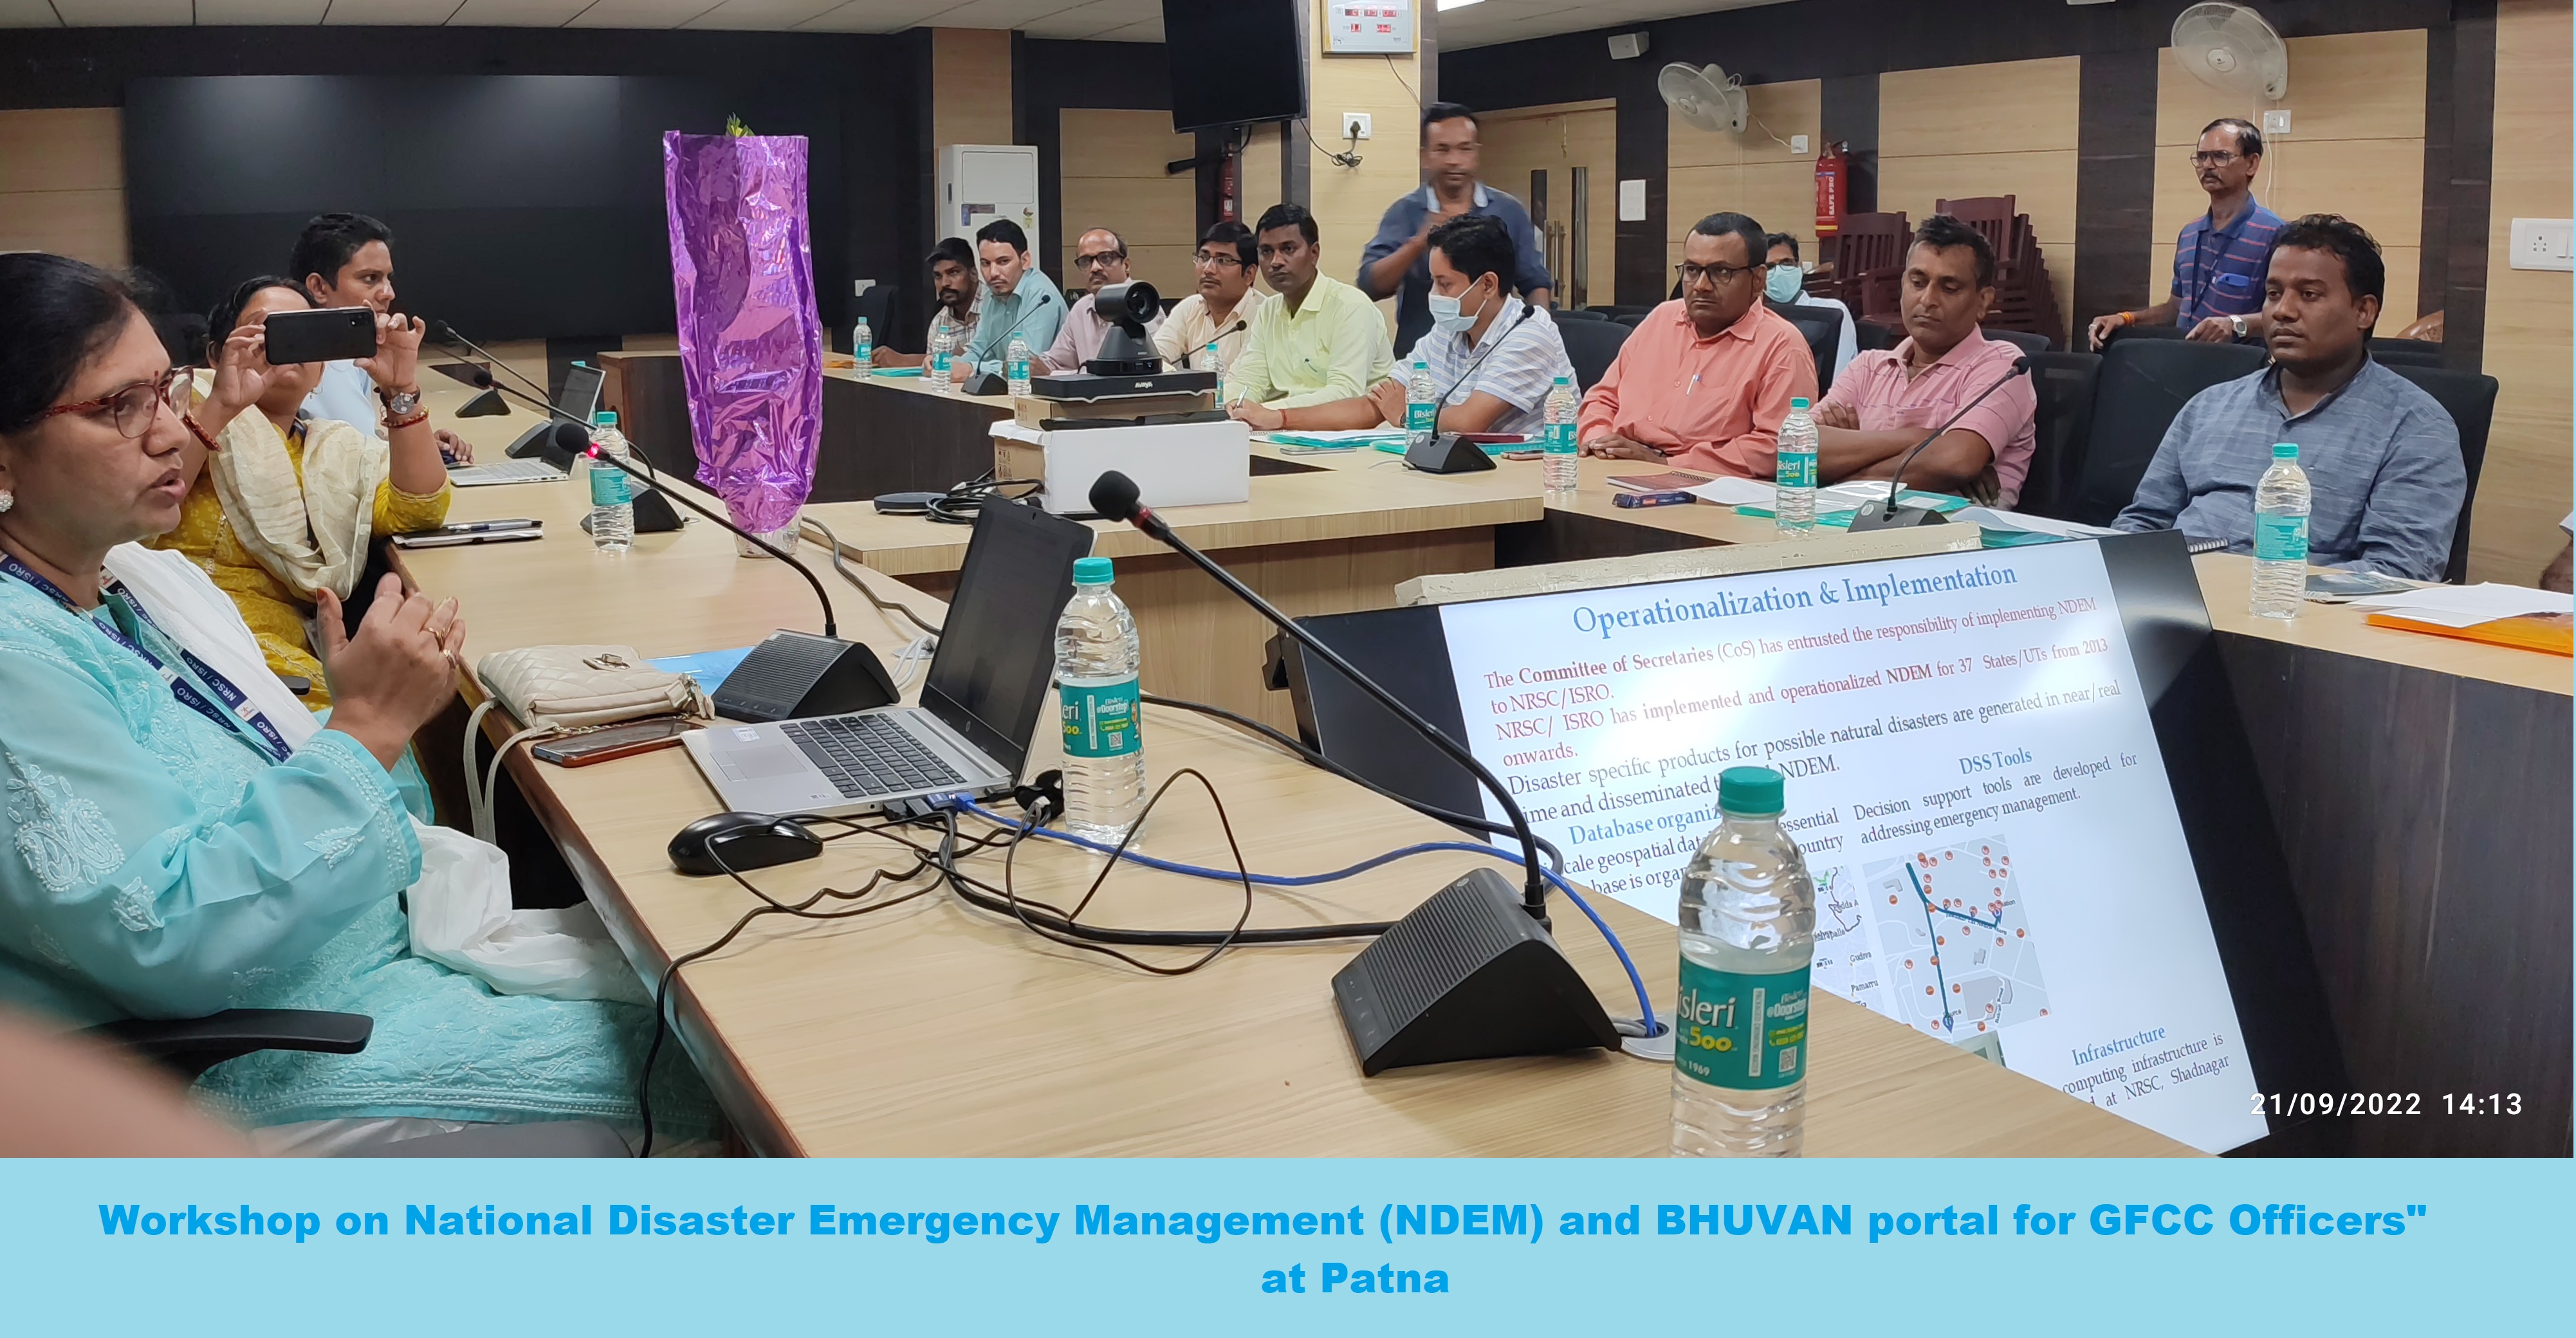  Workshop on National Disaster Emergency Management (NDEM) and BHUVAN portal for GFCC Officers" at Patna